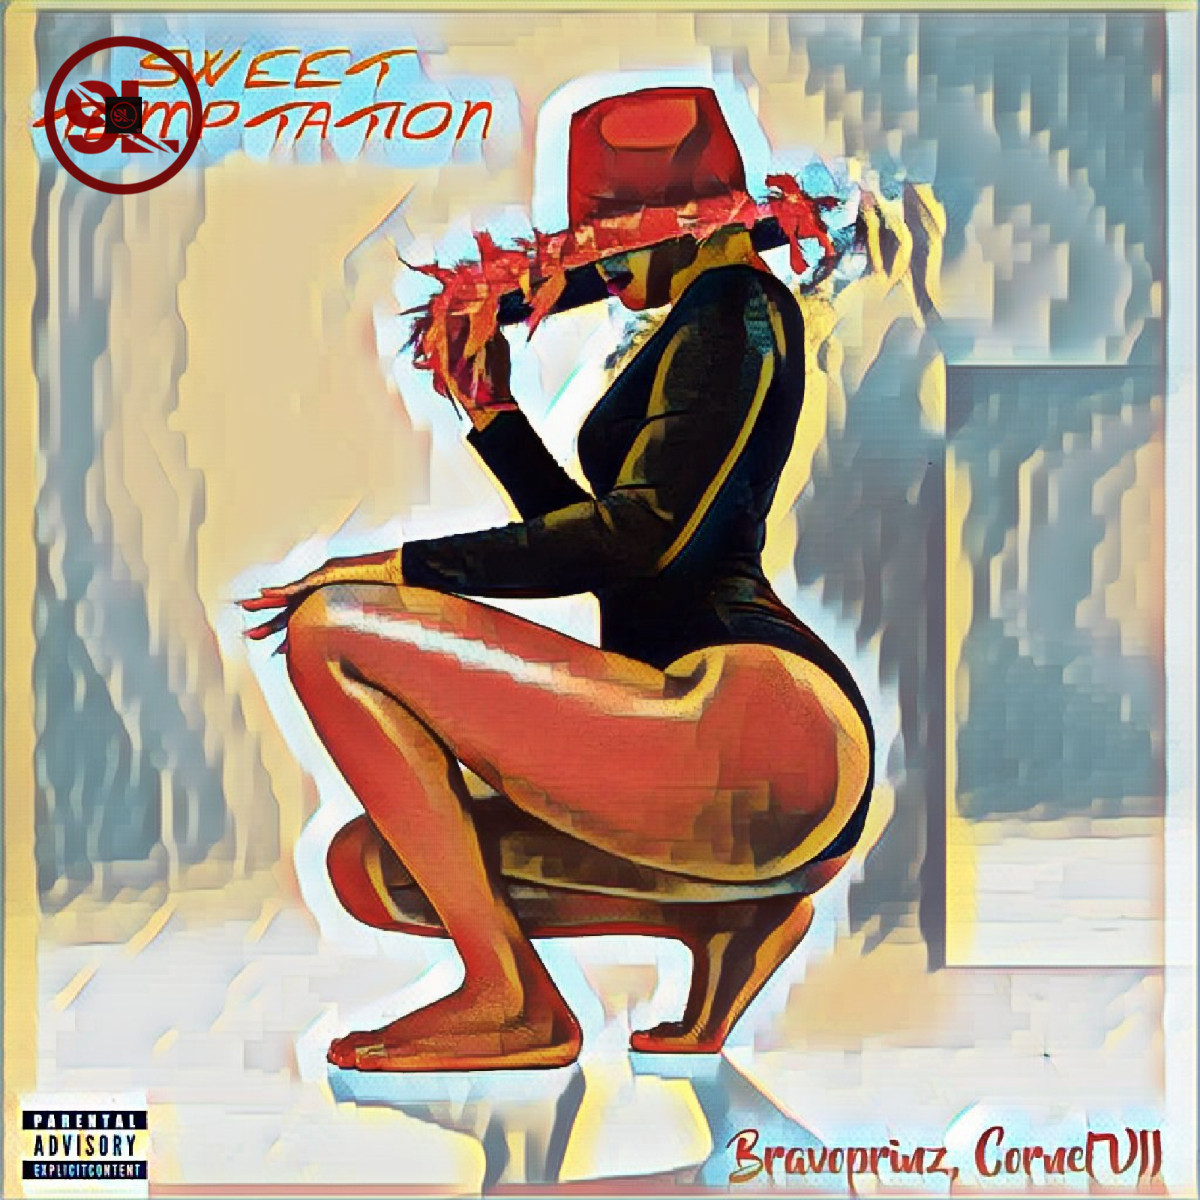 Bravoprinz – Sweet Temptation Feat. Cornel VII (prod. Aymix beats)